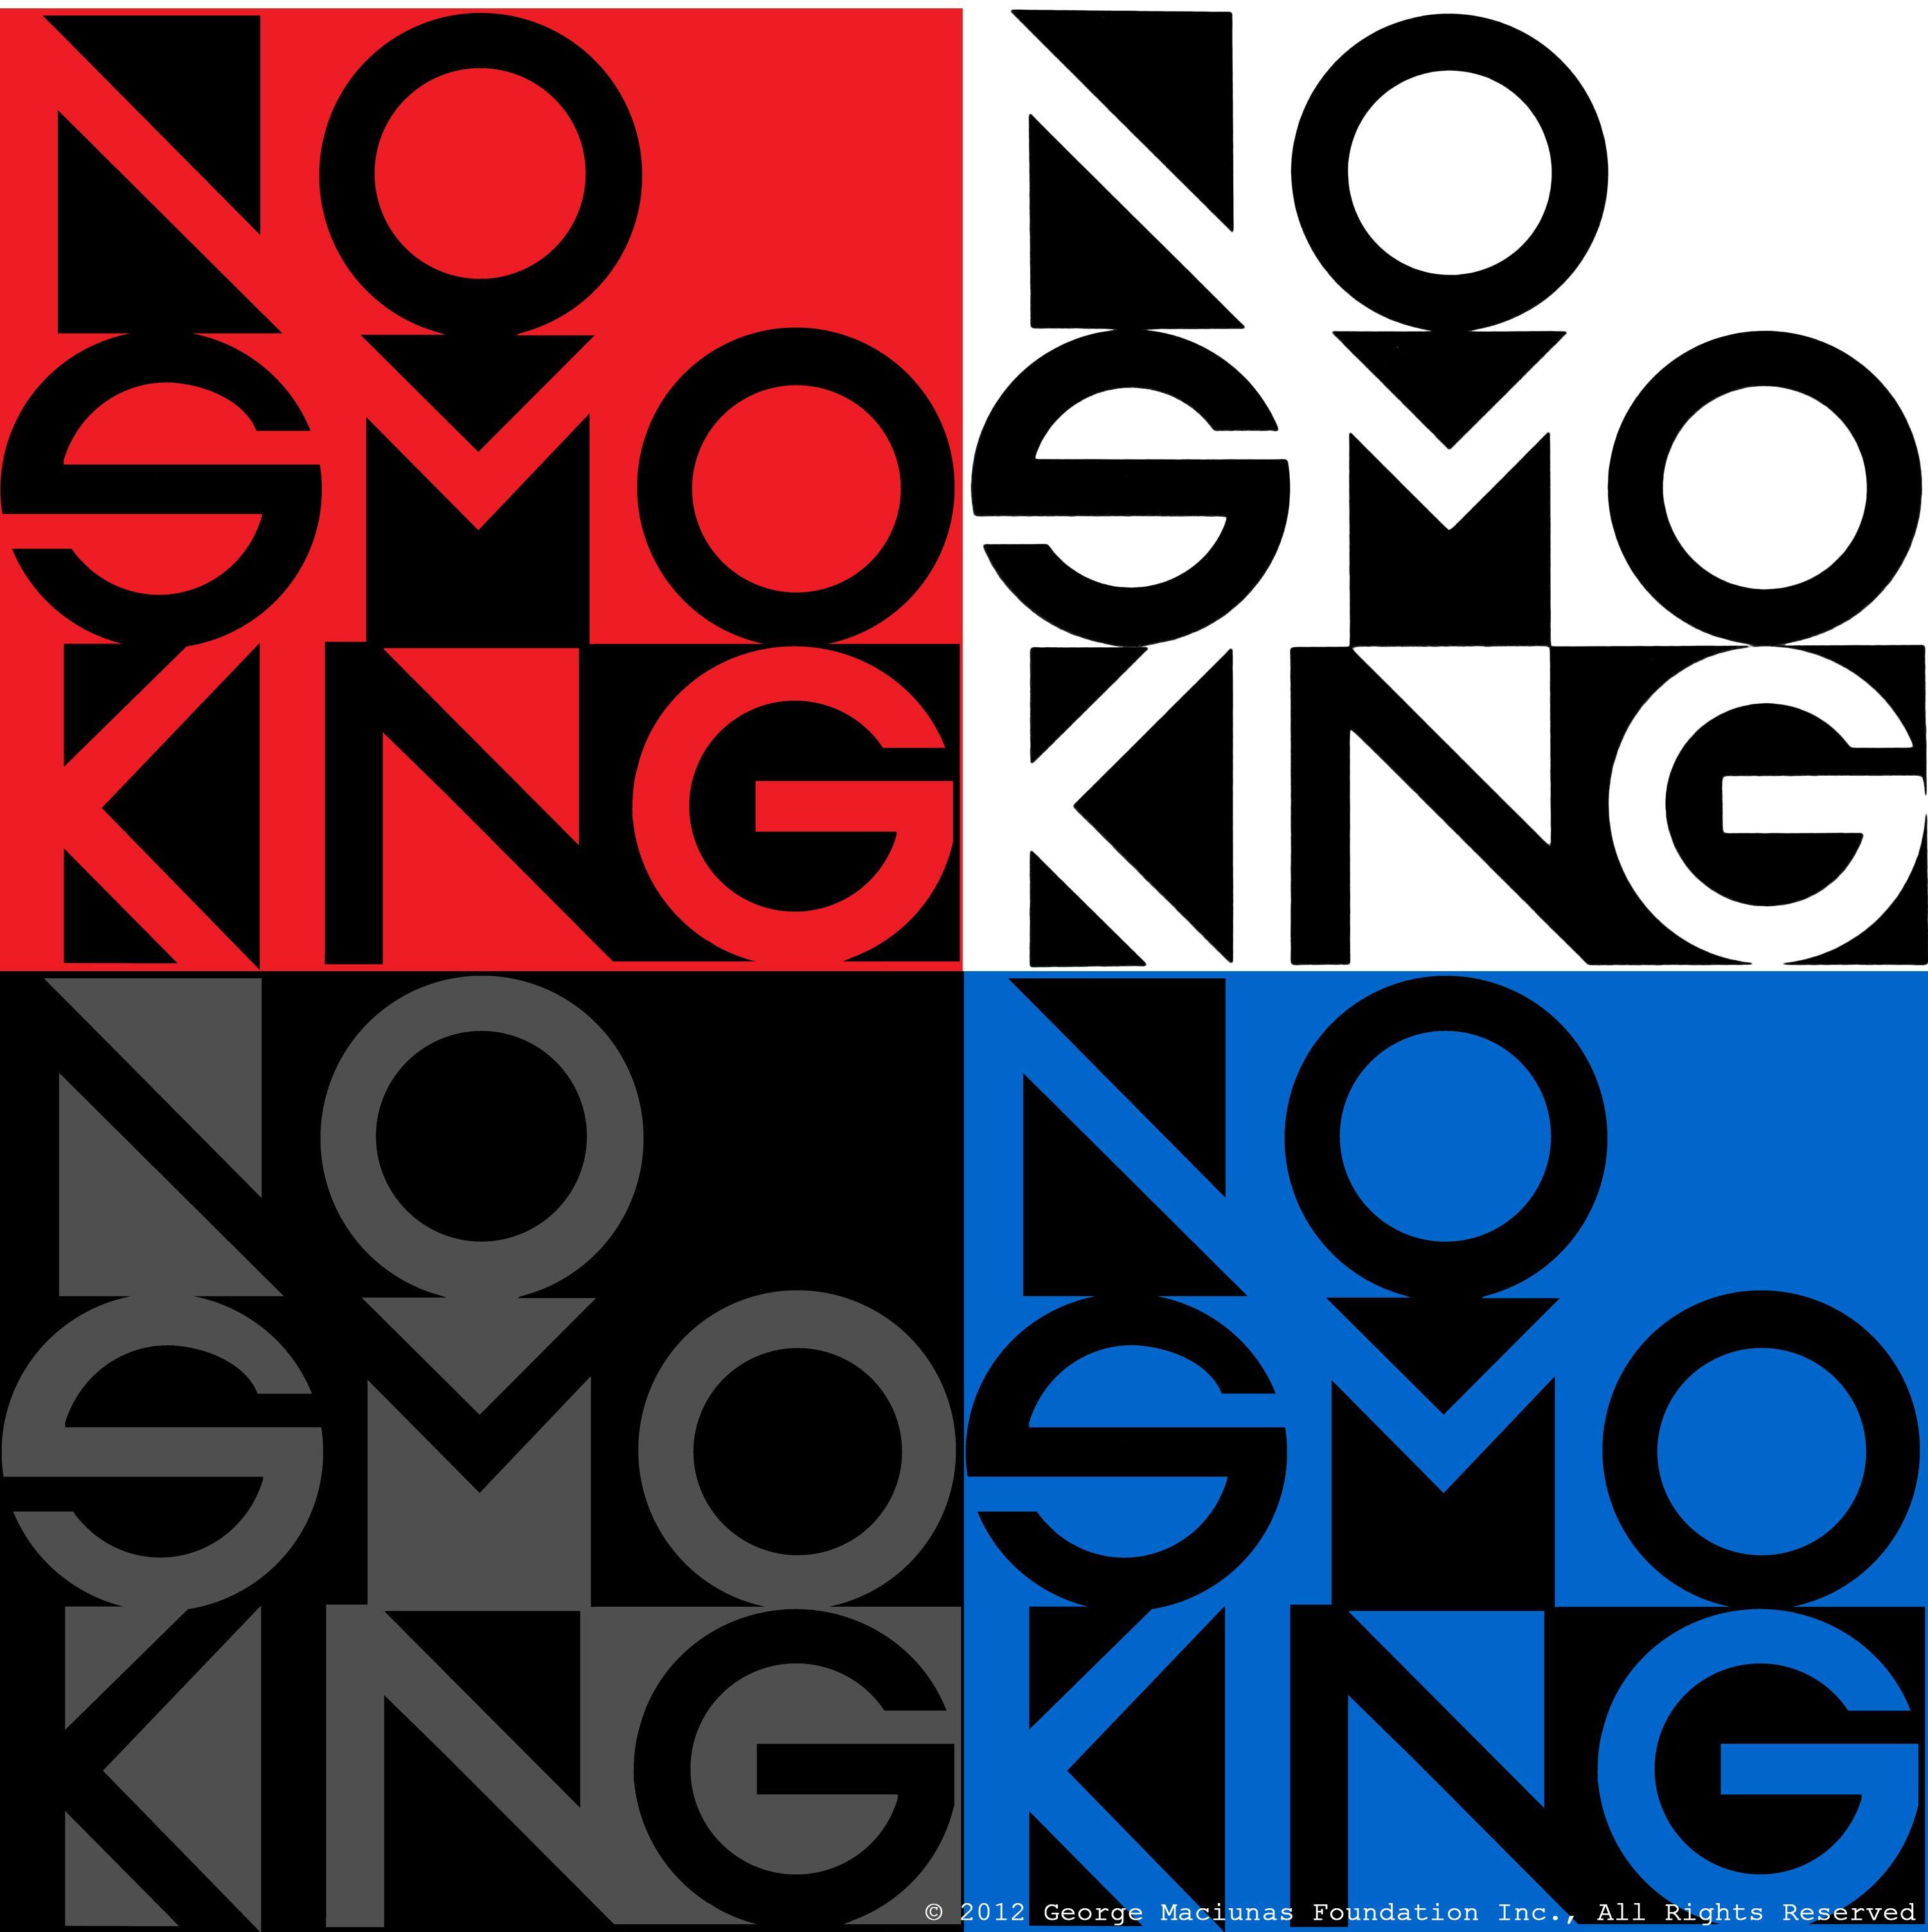 New Publication: Fluxus / George Maciunas “No Smoking” screen print